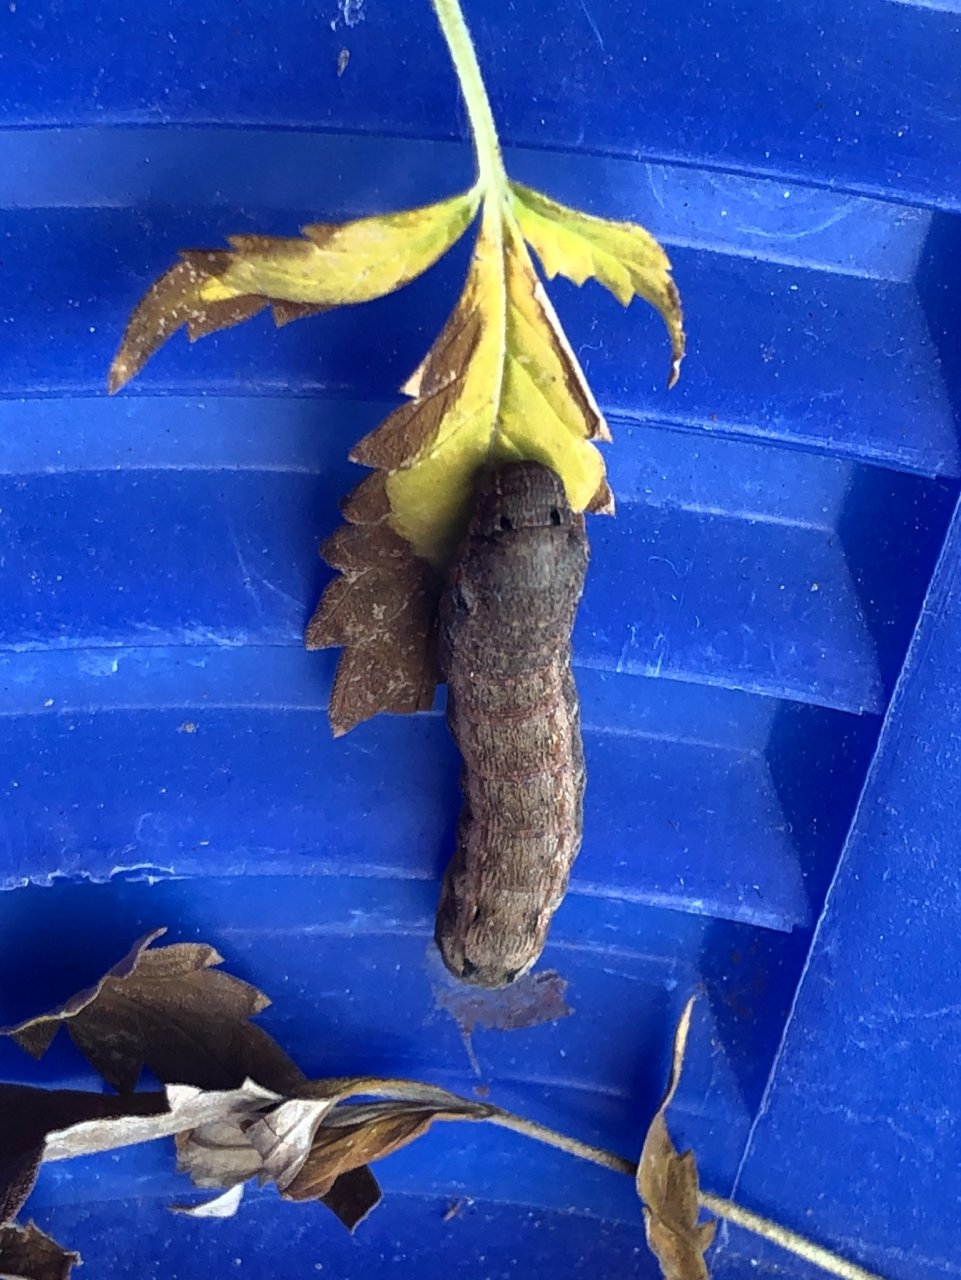 Big ugly caterpillar from Julie